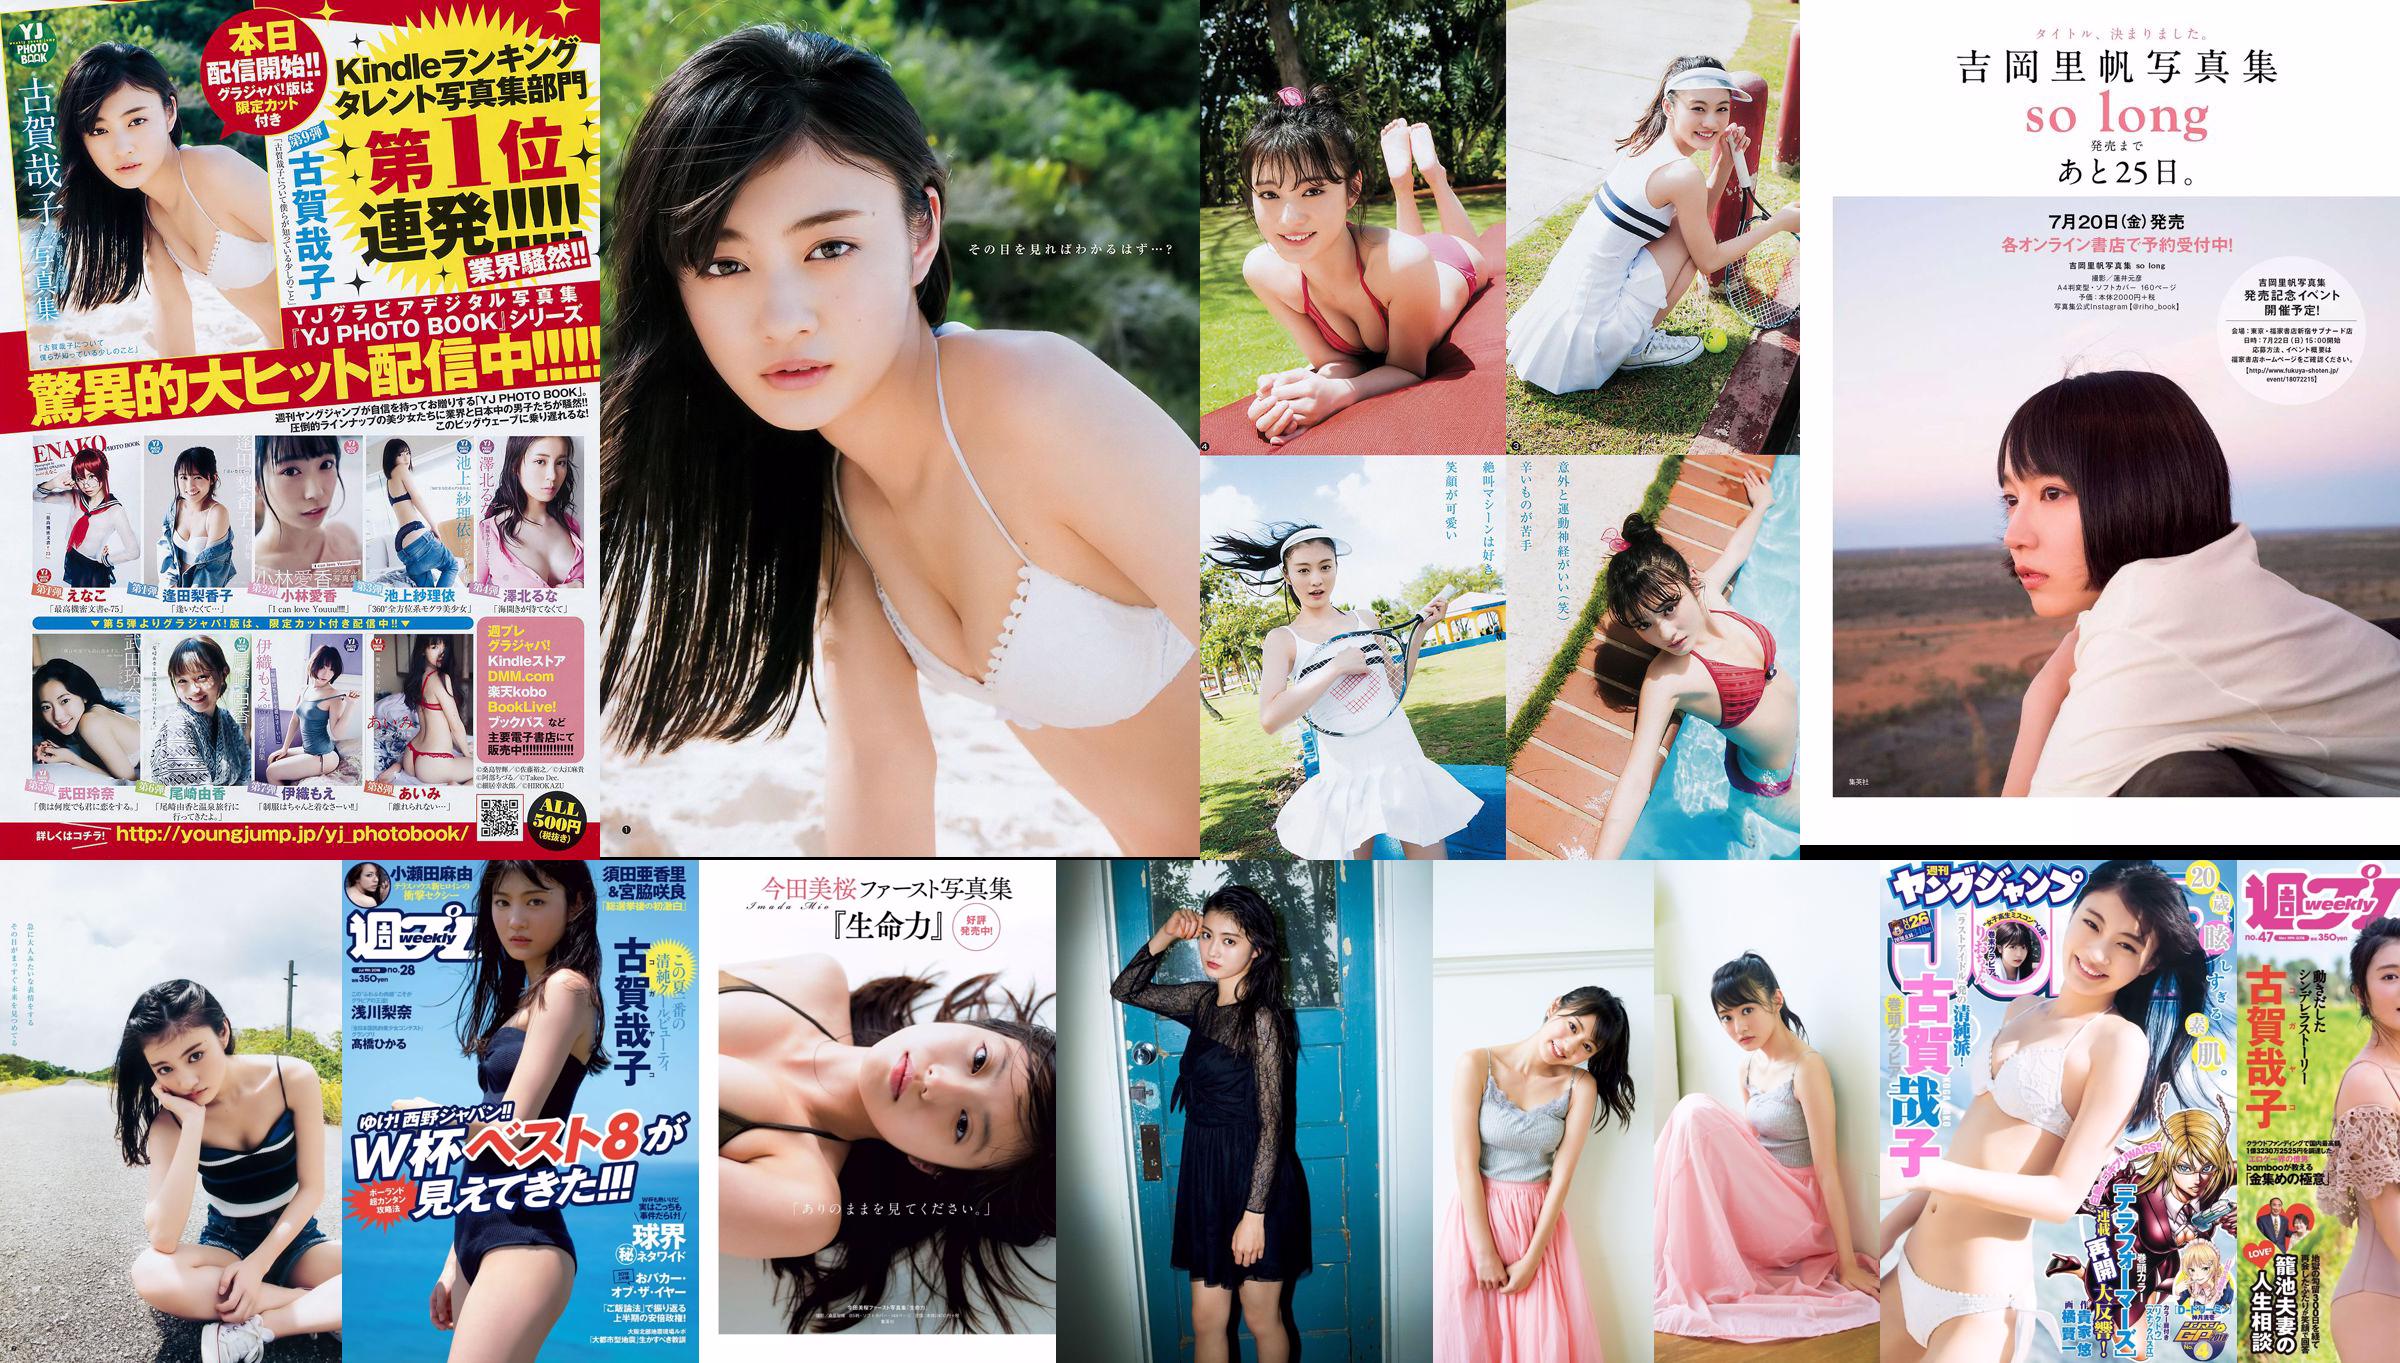 Йошико Кога Риочон [Weekly Young Jump] № 26 фото журнала в 2018 году No.0c3237 Страница 3